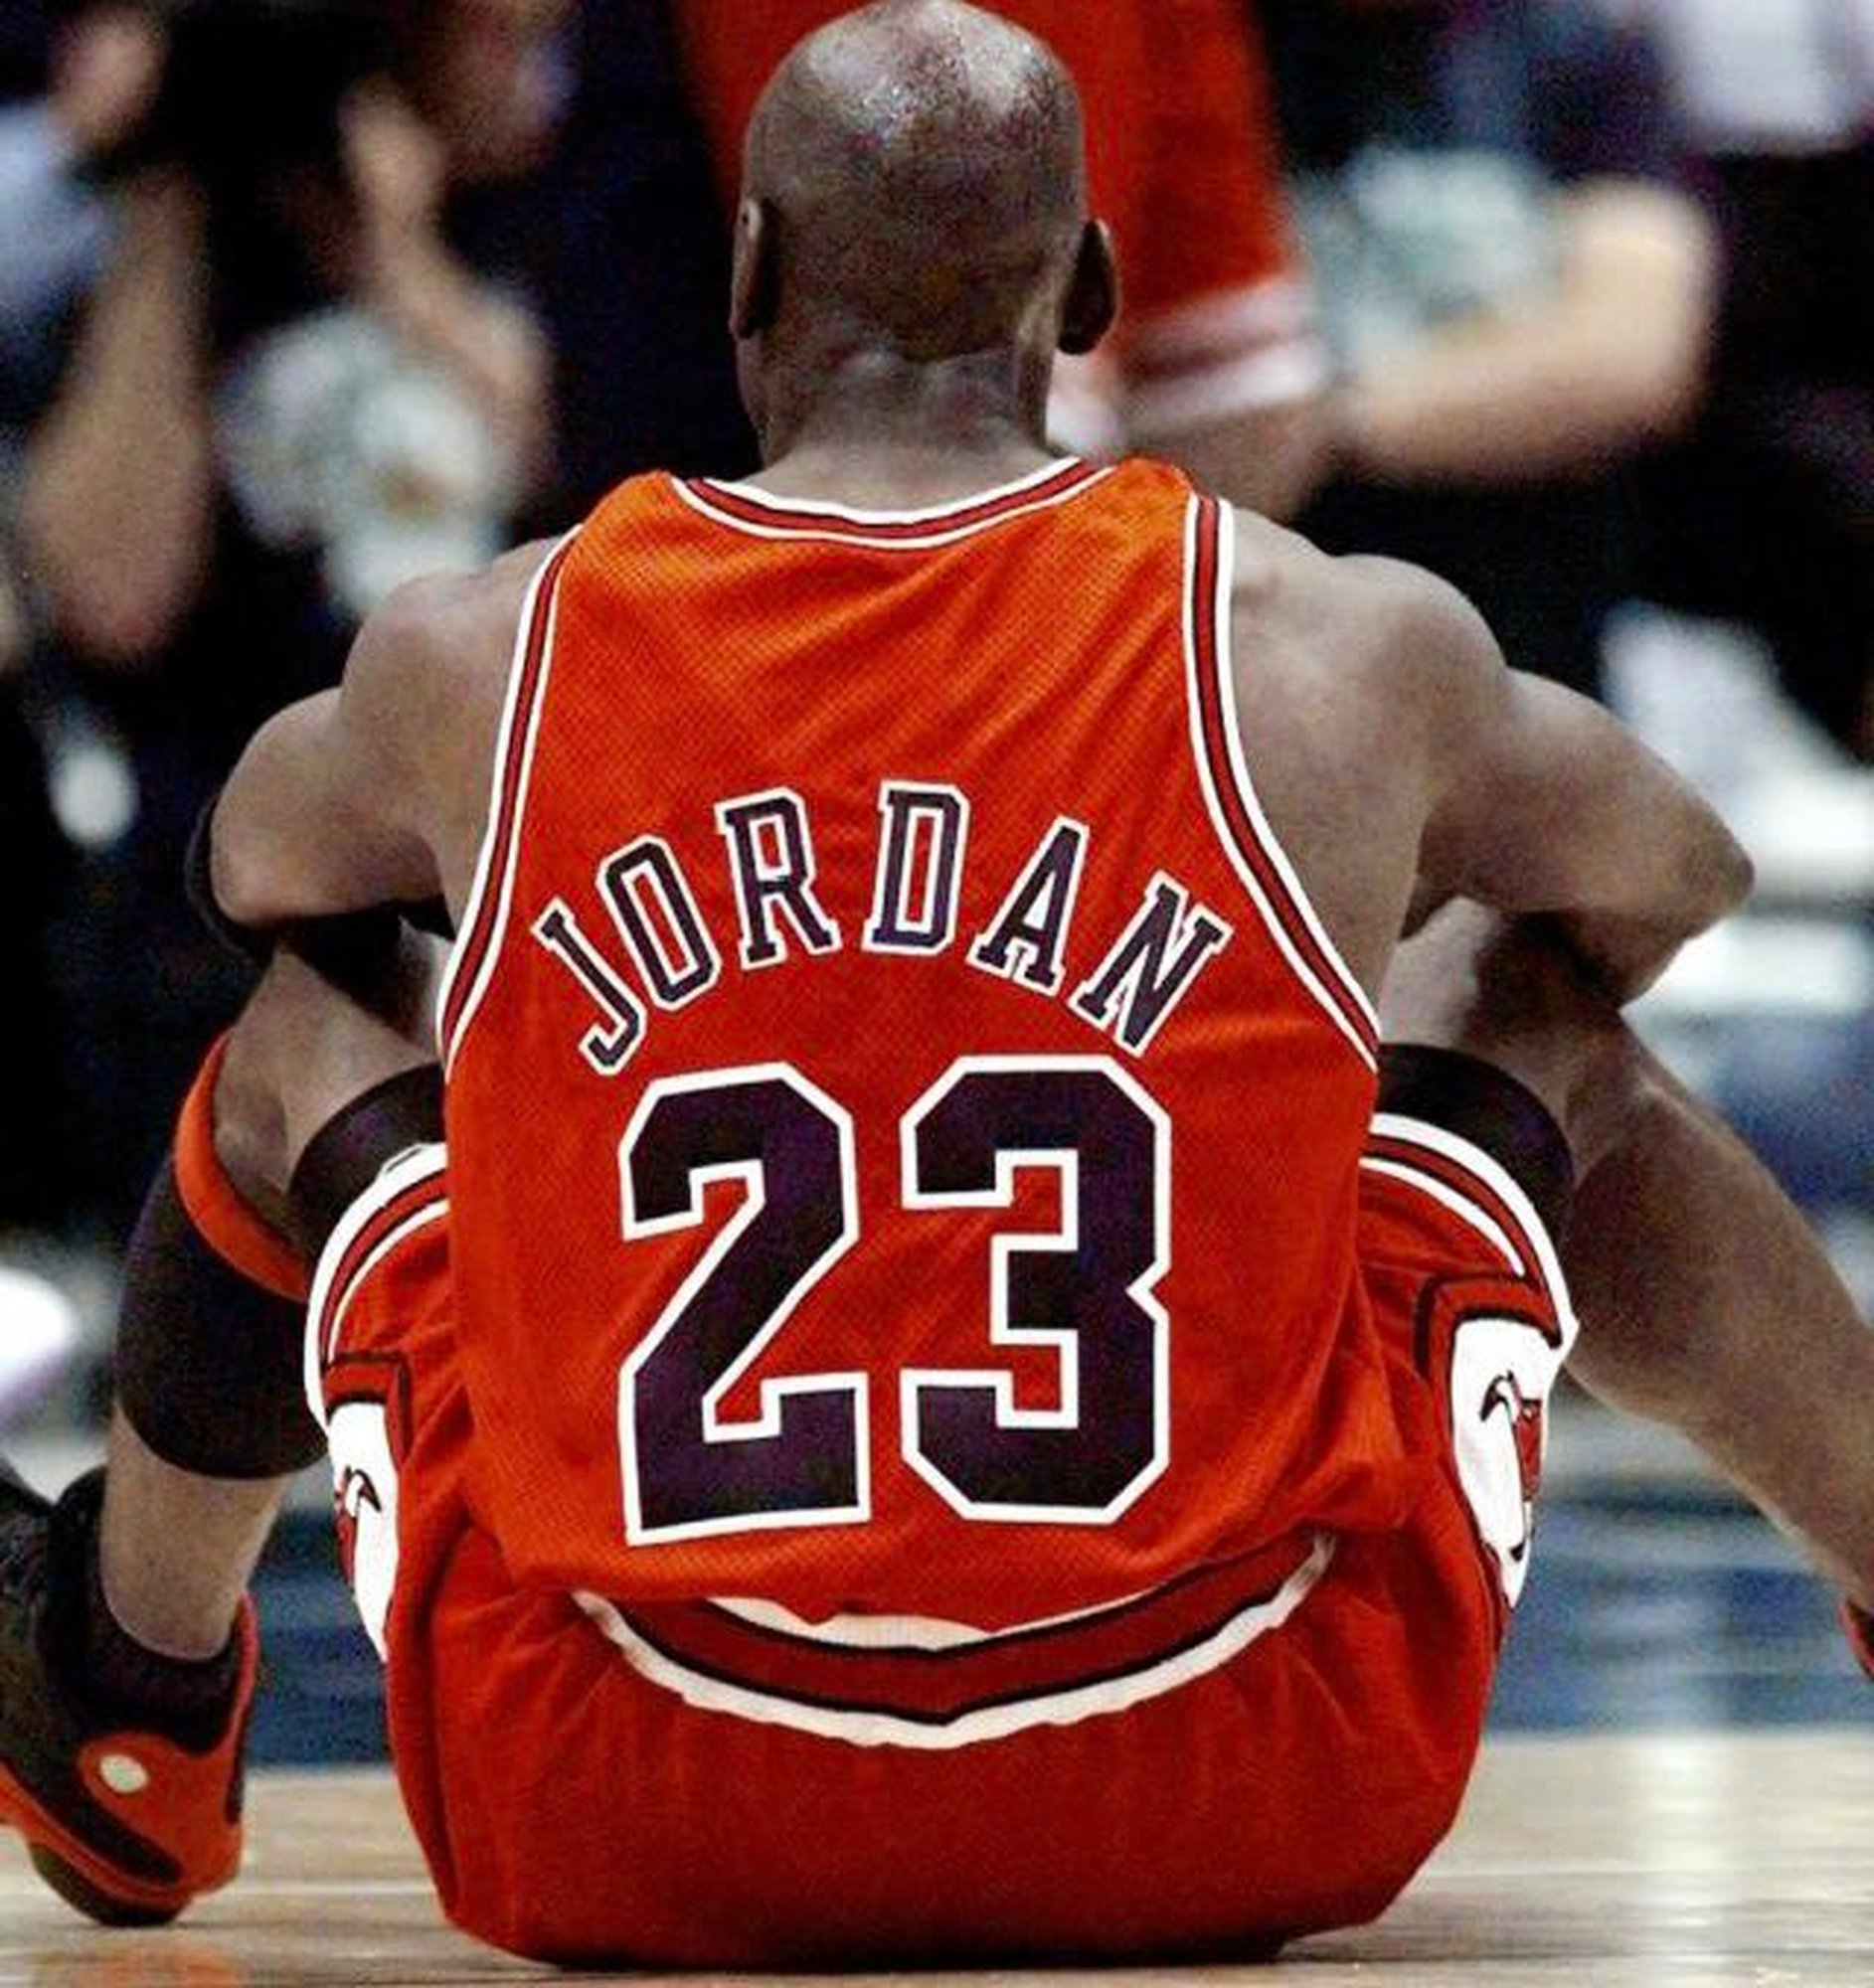 Michael Jordan's jersey becomes the highest-selling sport memorabilia